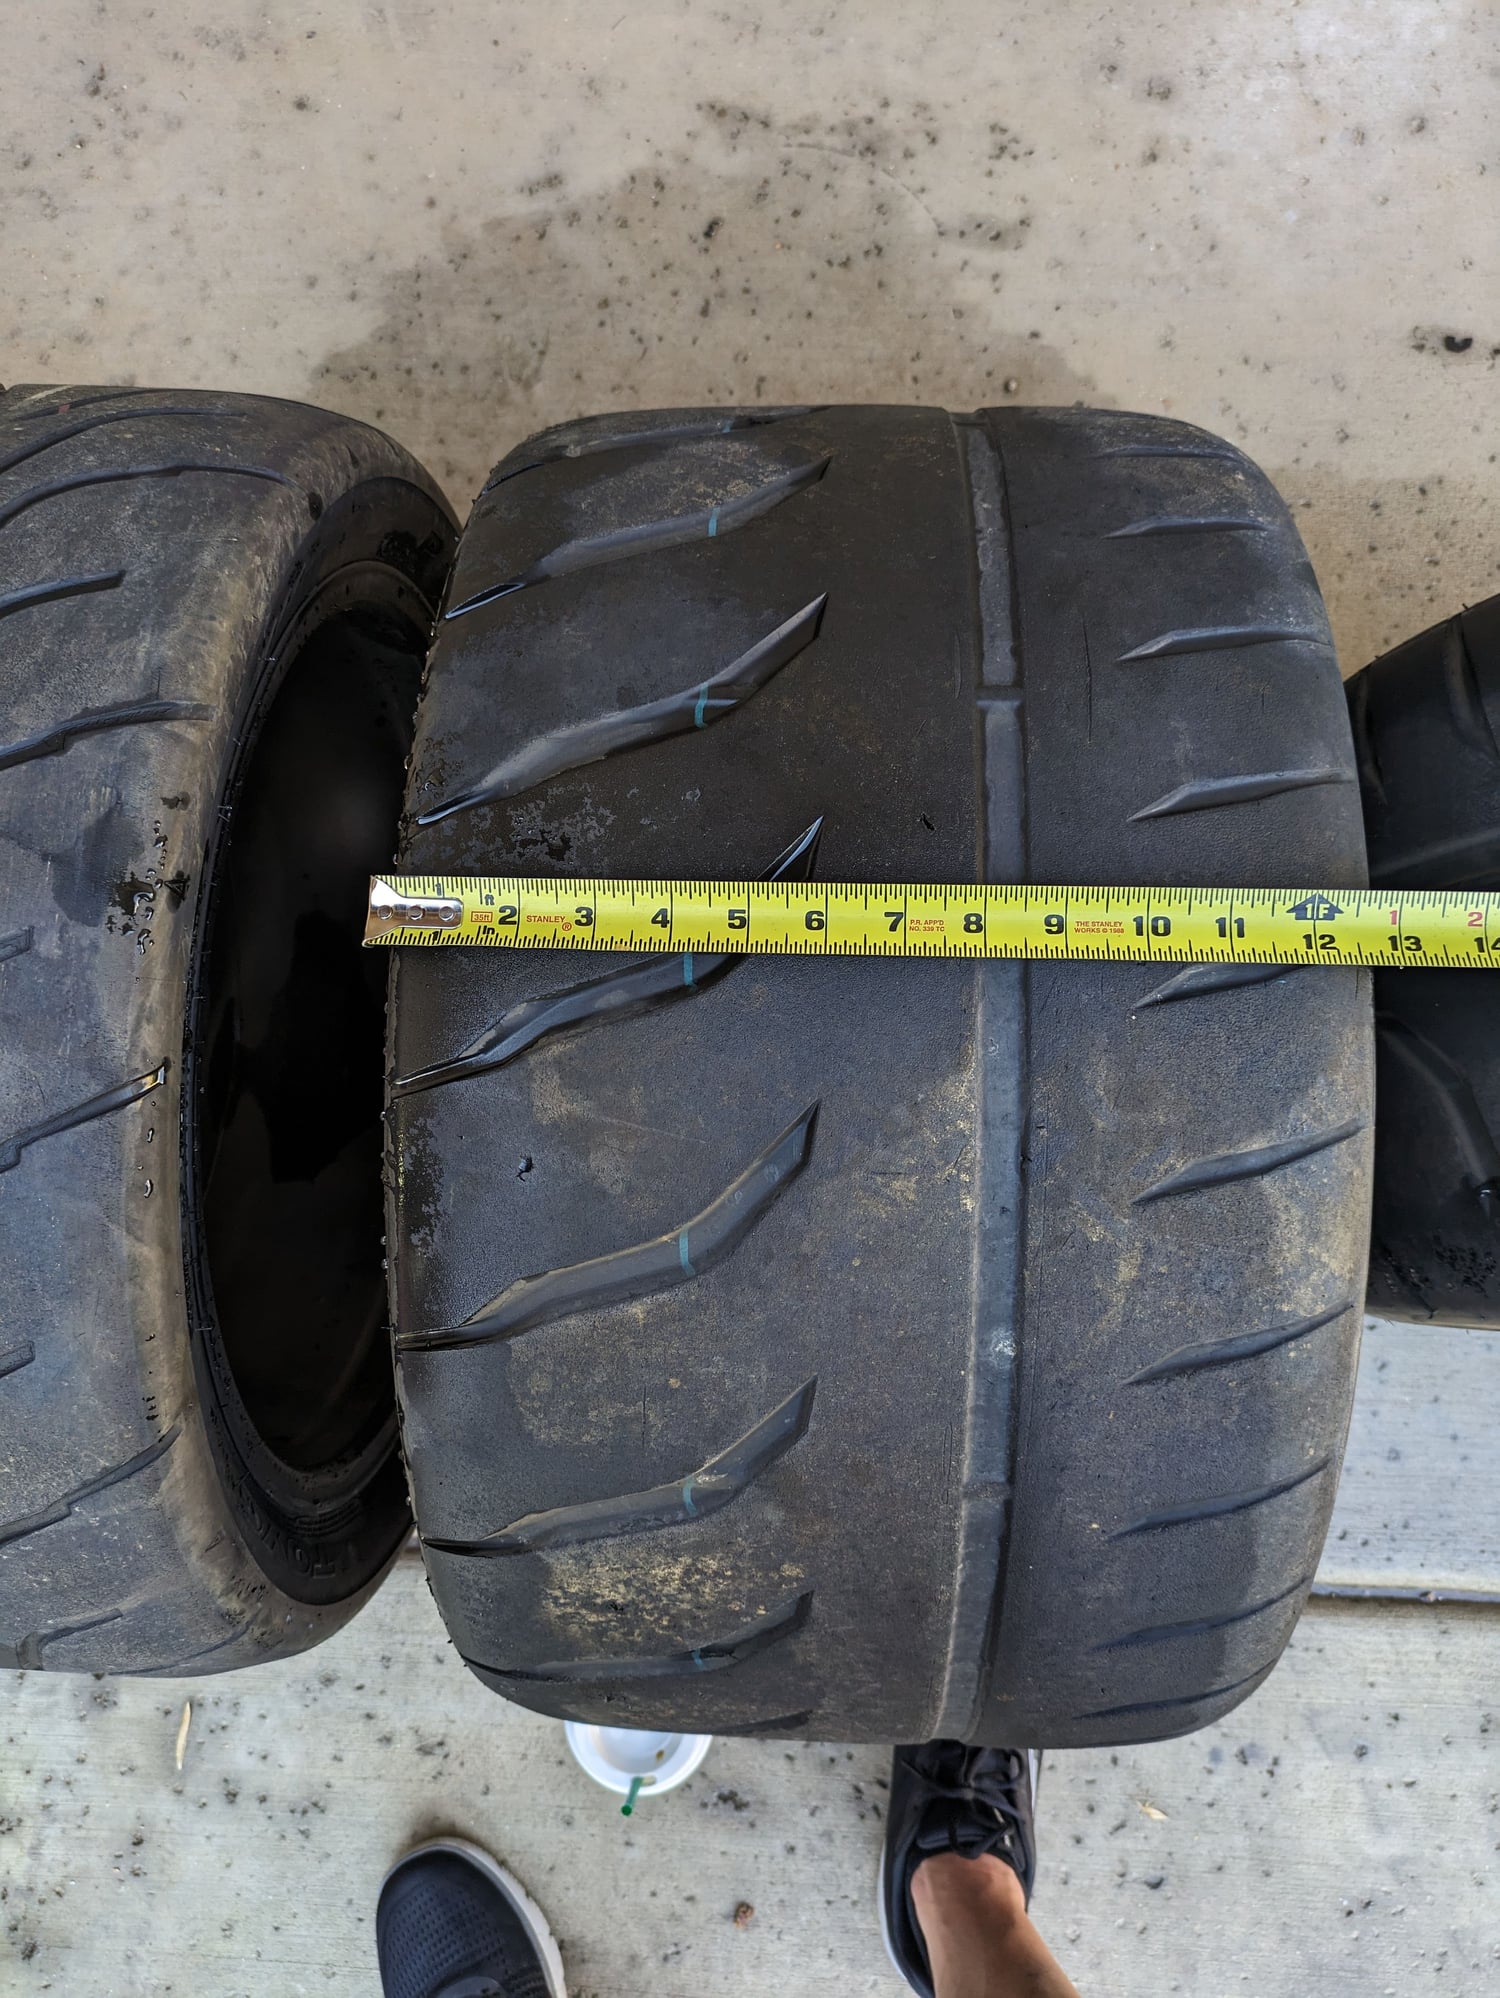 Wheels and Tires/Axles - OZ Racing ALLEGGERITA Centerlock wheels with R888R Proxes. 997 Widebody offset - Used - Phoenix, AZ 85396, United States